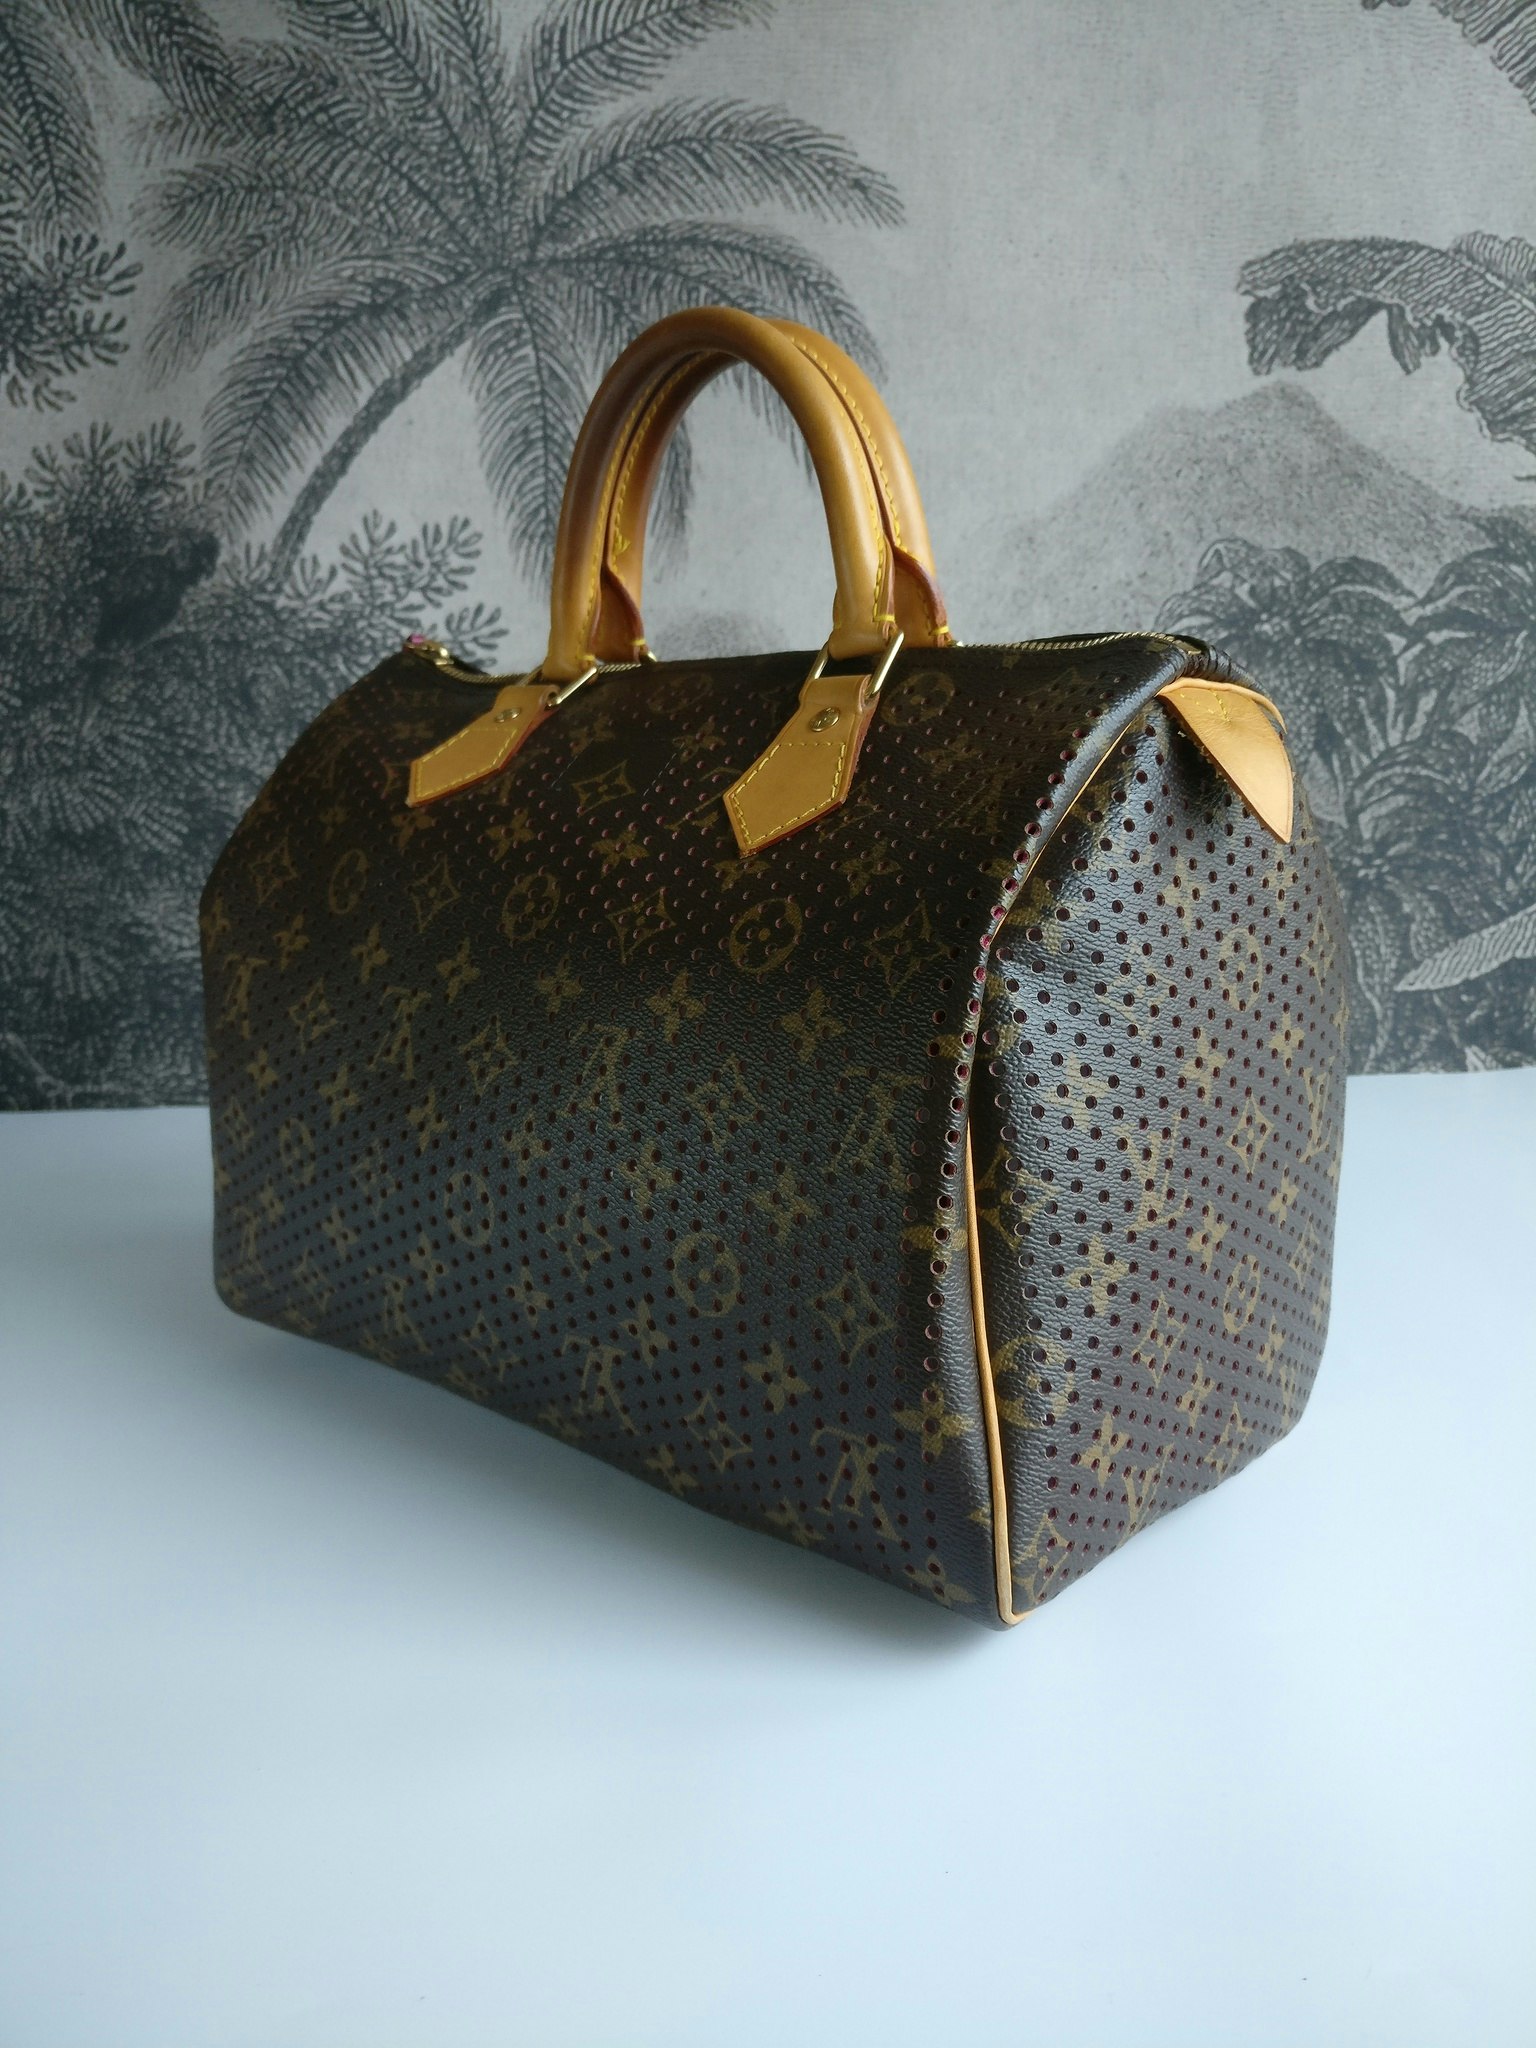 Louis Vuitton Speedy Handbag Perforated Monogram Canvas 30 Brown 2275382